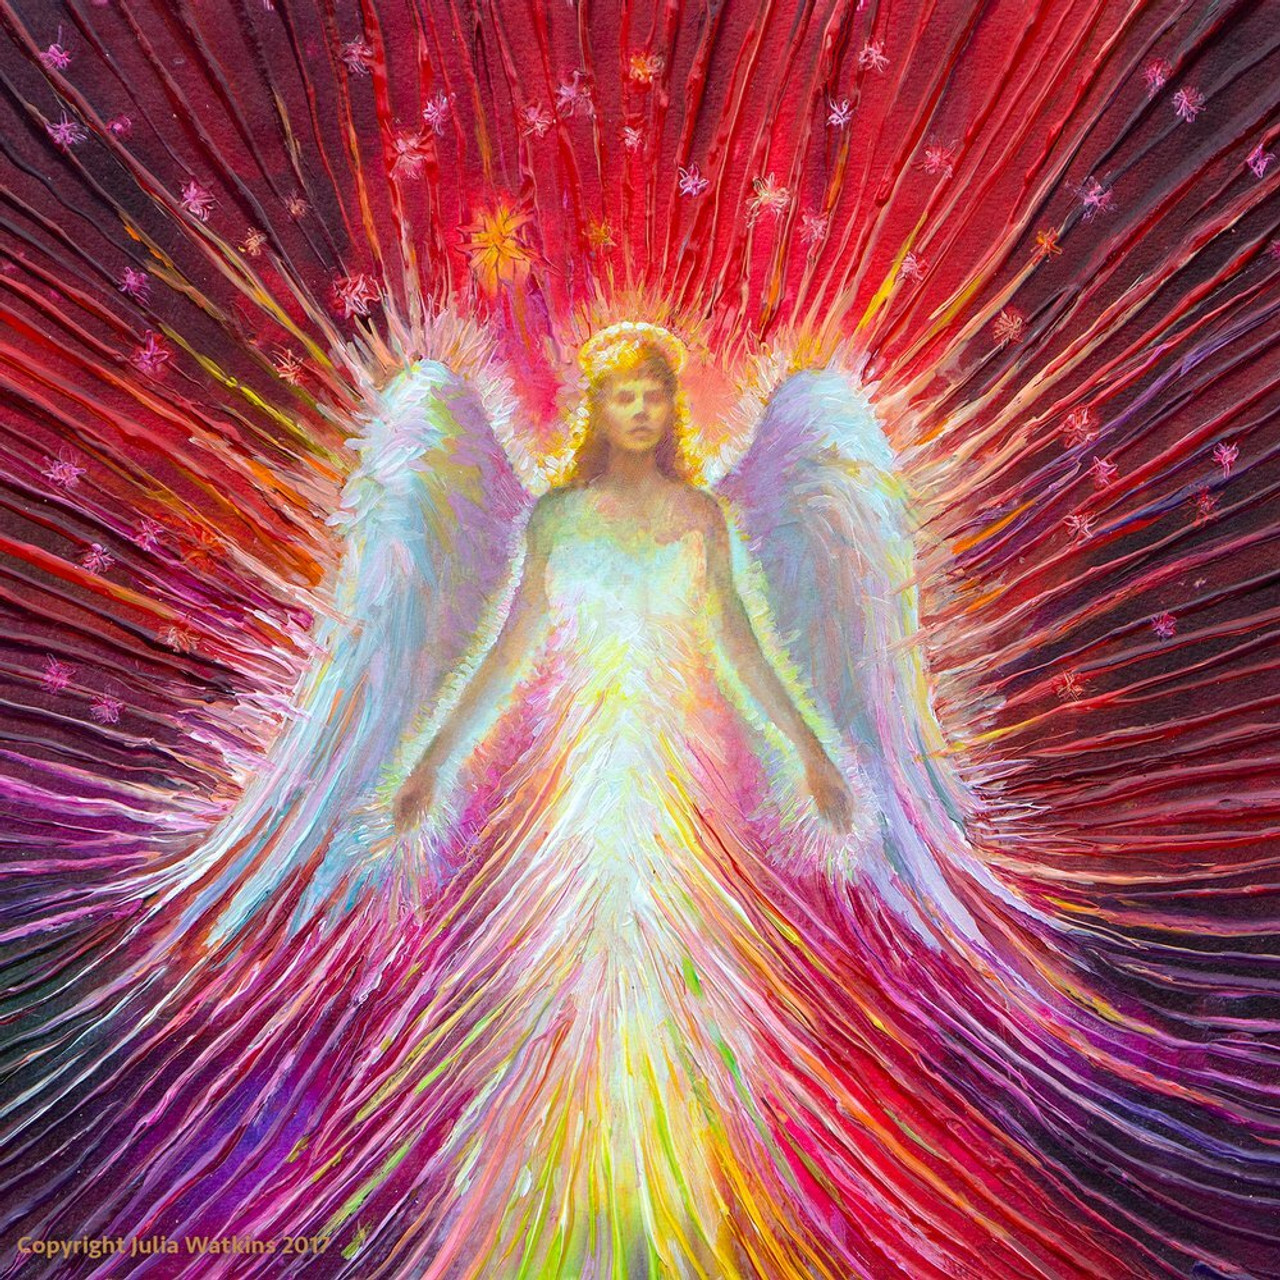 The Angel Of New Hope Energy Painting - Giclee Print - Energy Artist Julia